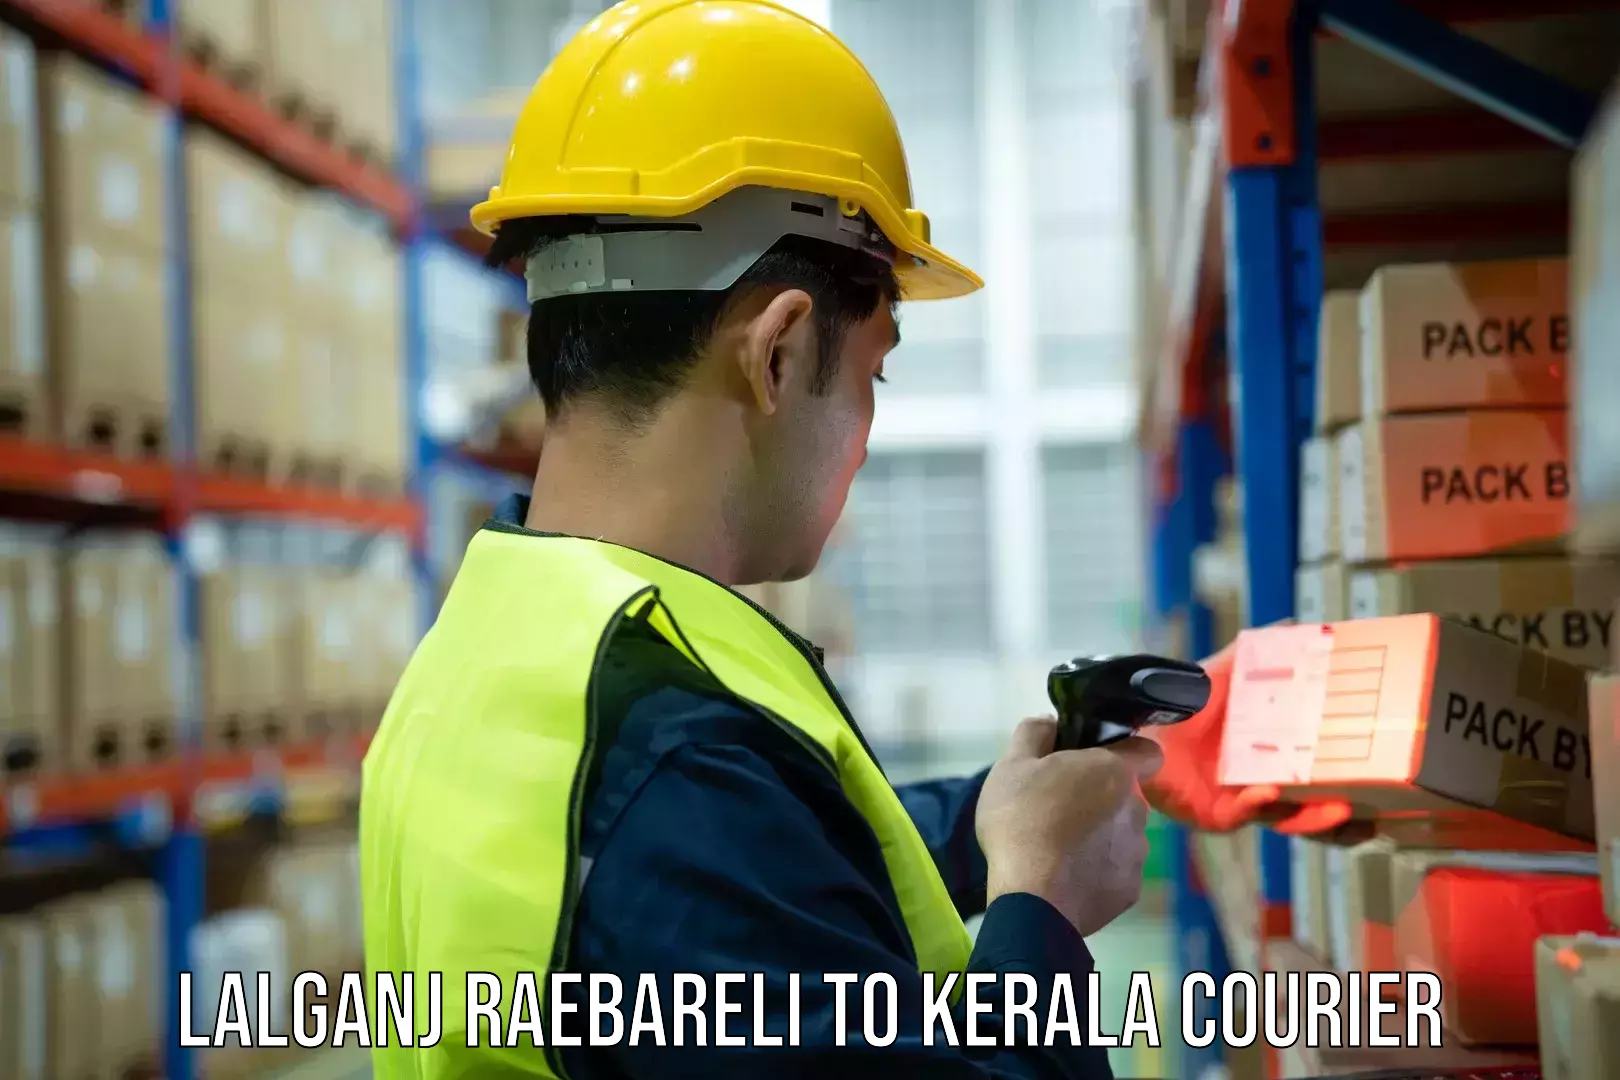 High-speed parcel service Lalganj Raebareli to Kerala